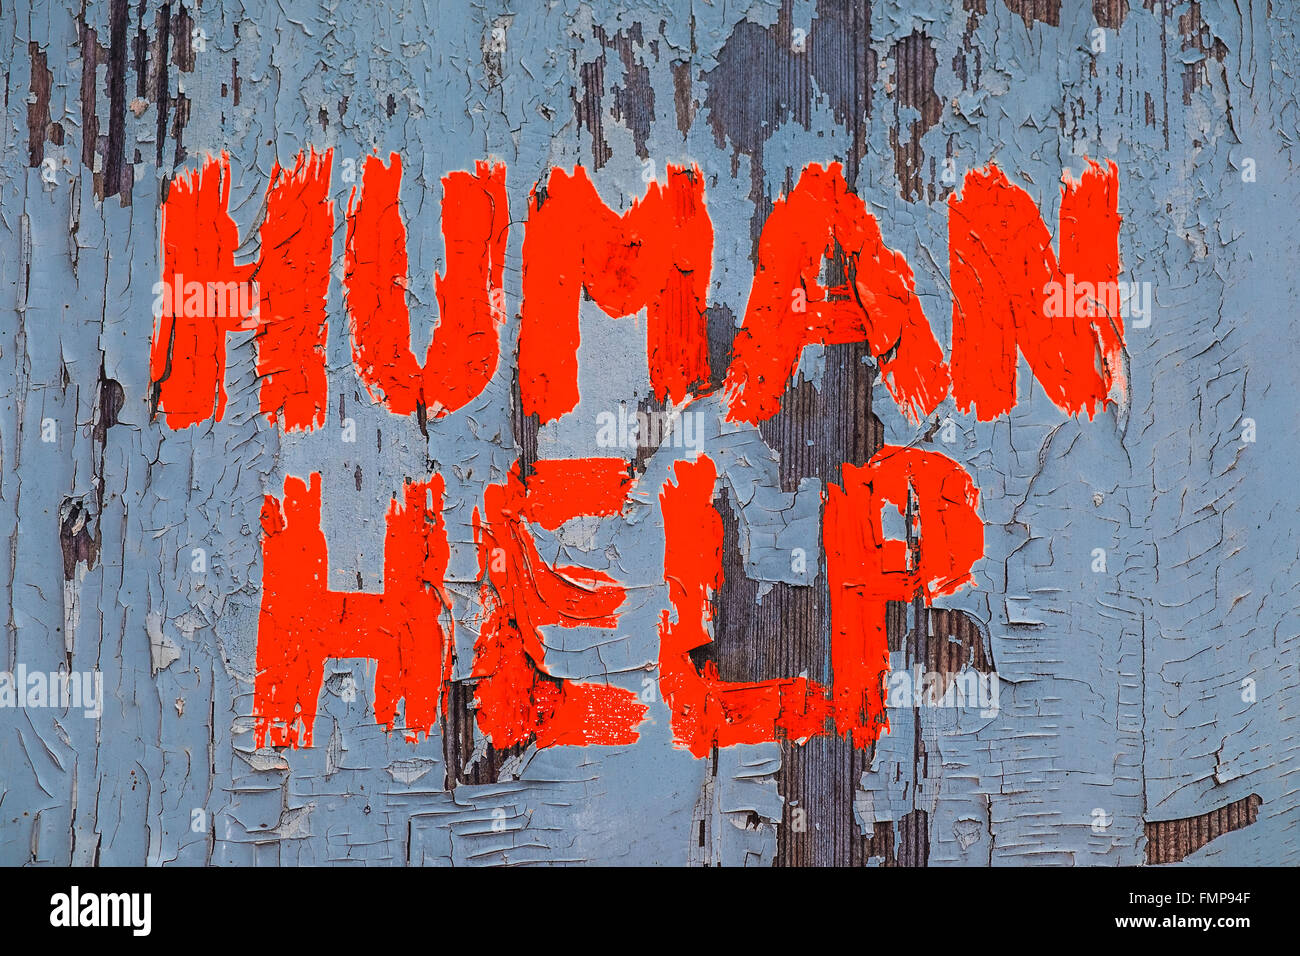 Graffiti reading Human help, calling for humanitarian aid Stock Photo